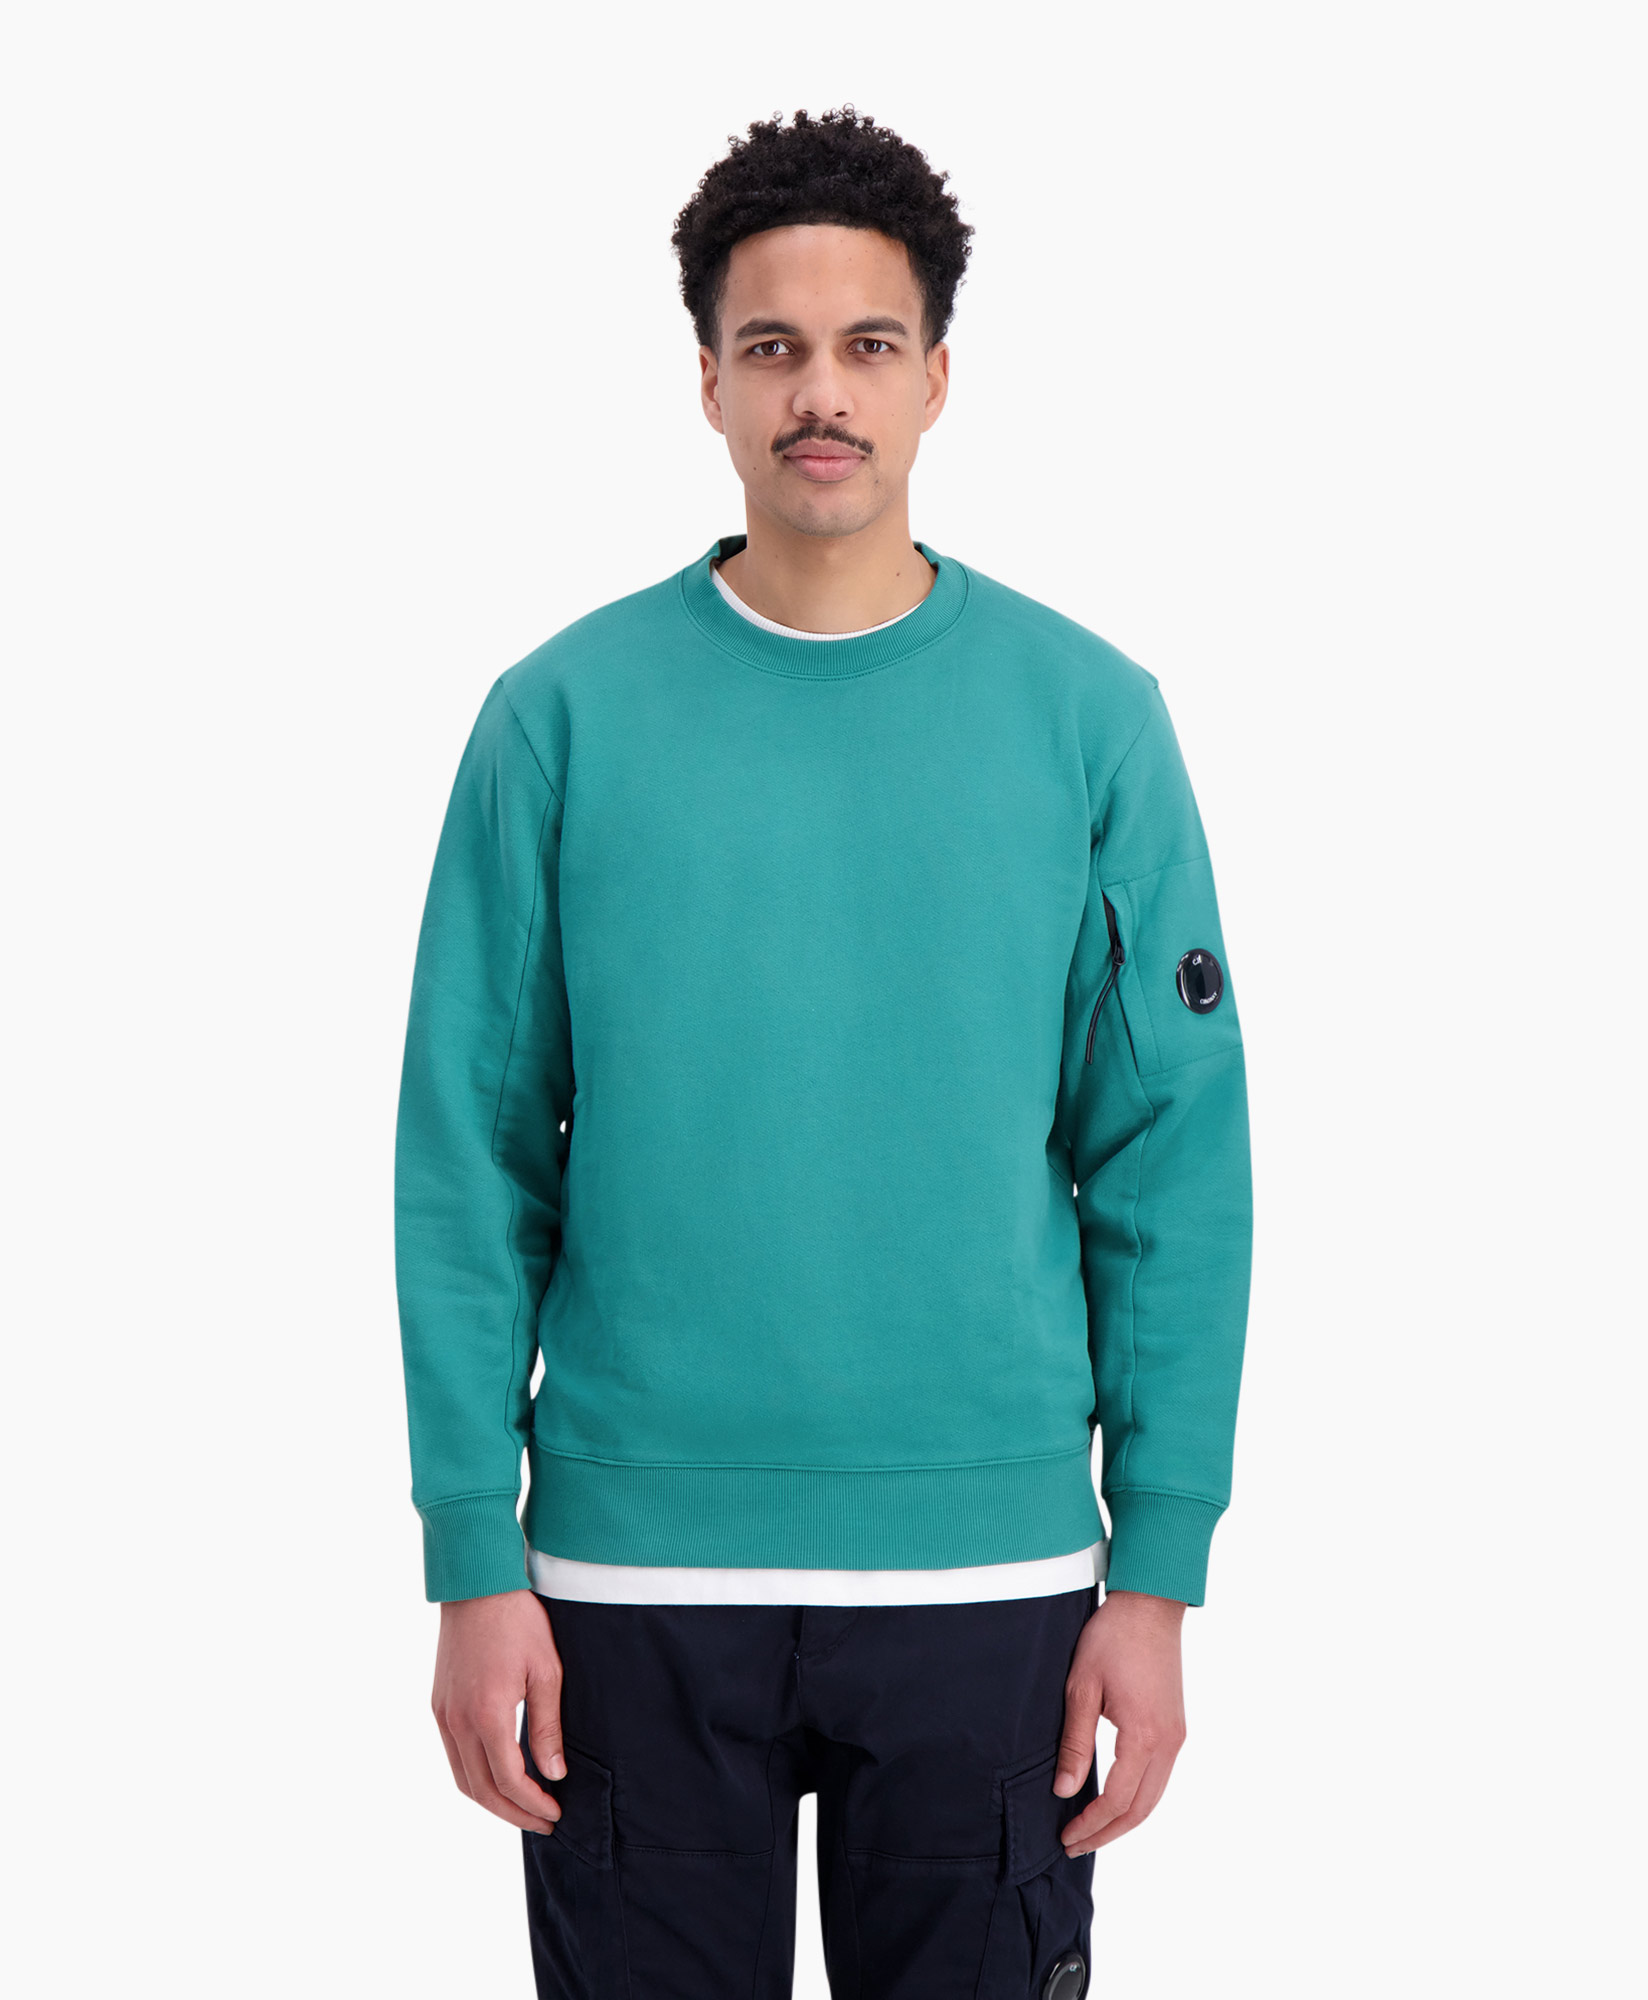 Cp Company Sweater S022a-005086w Groen